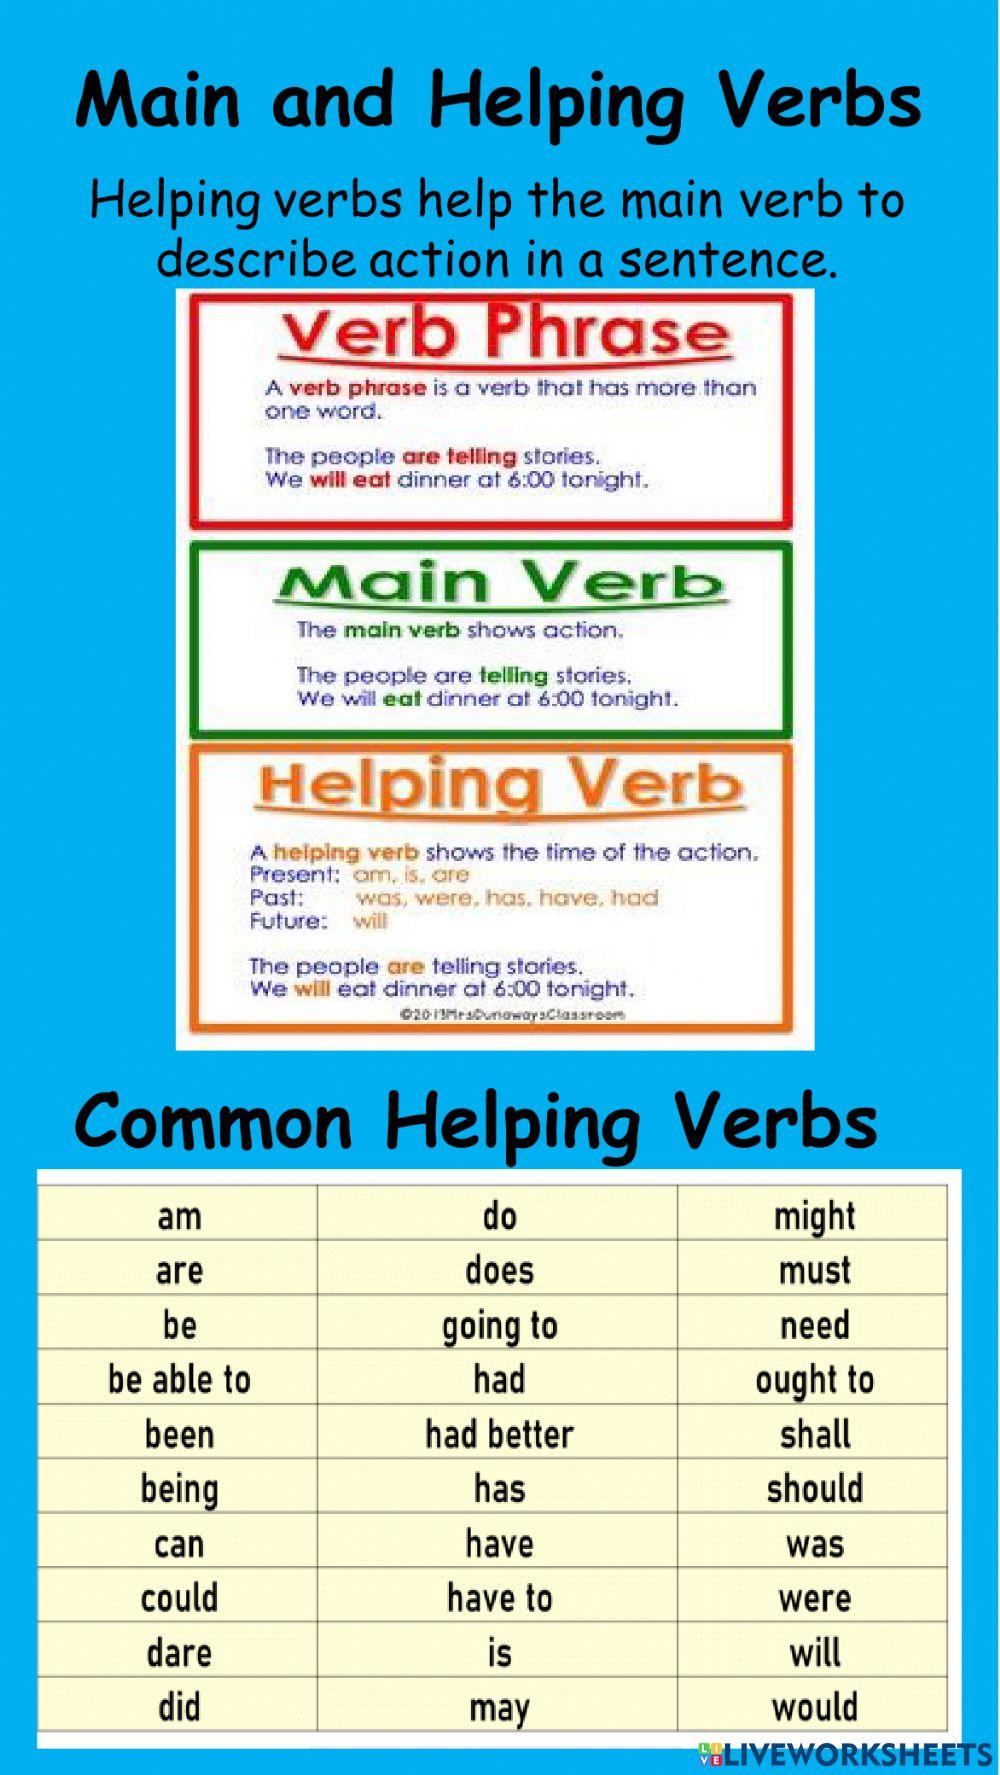 Main and Helping Verbs Notes